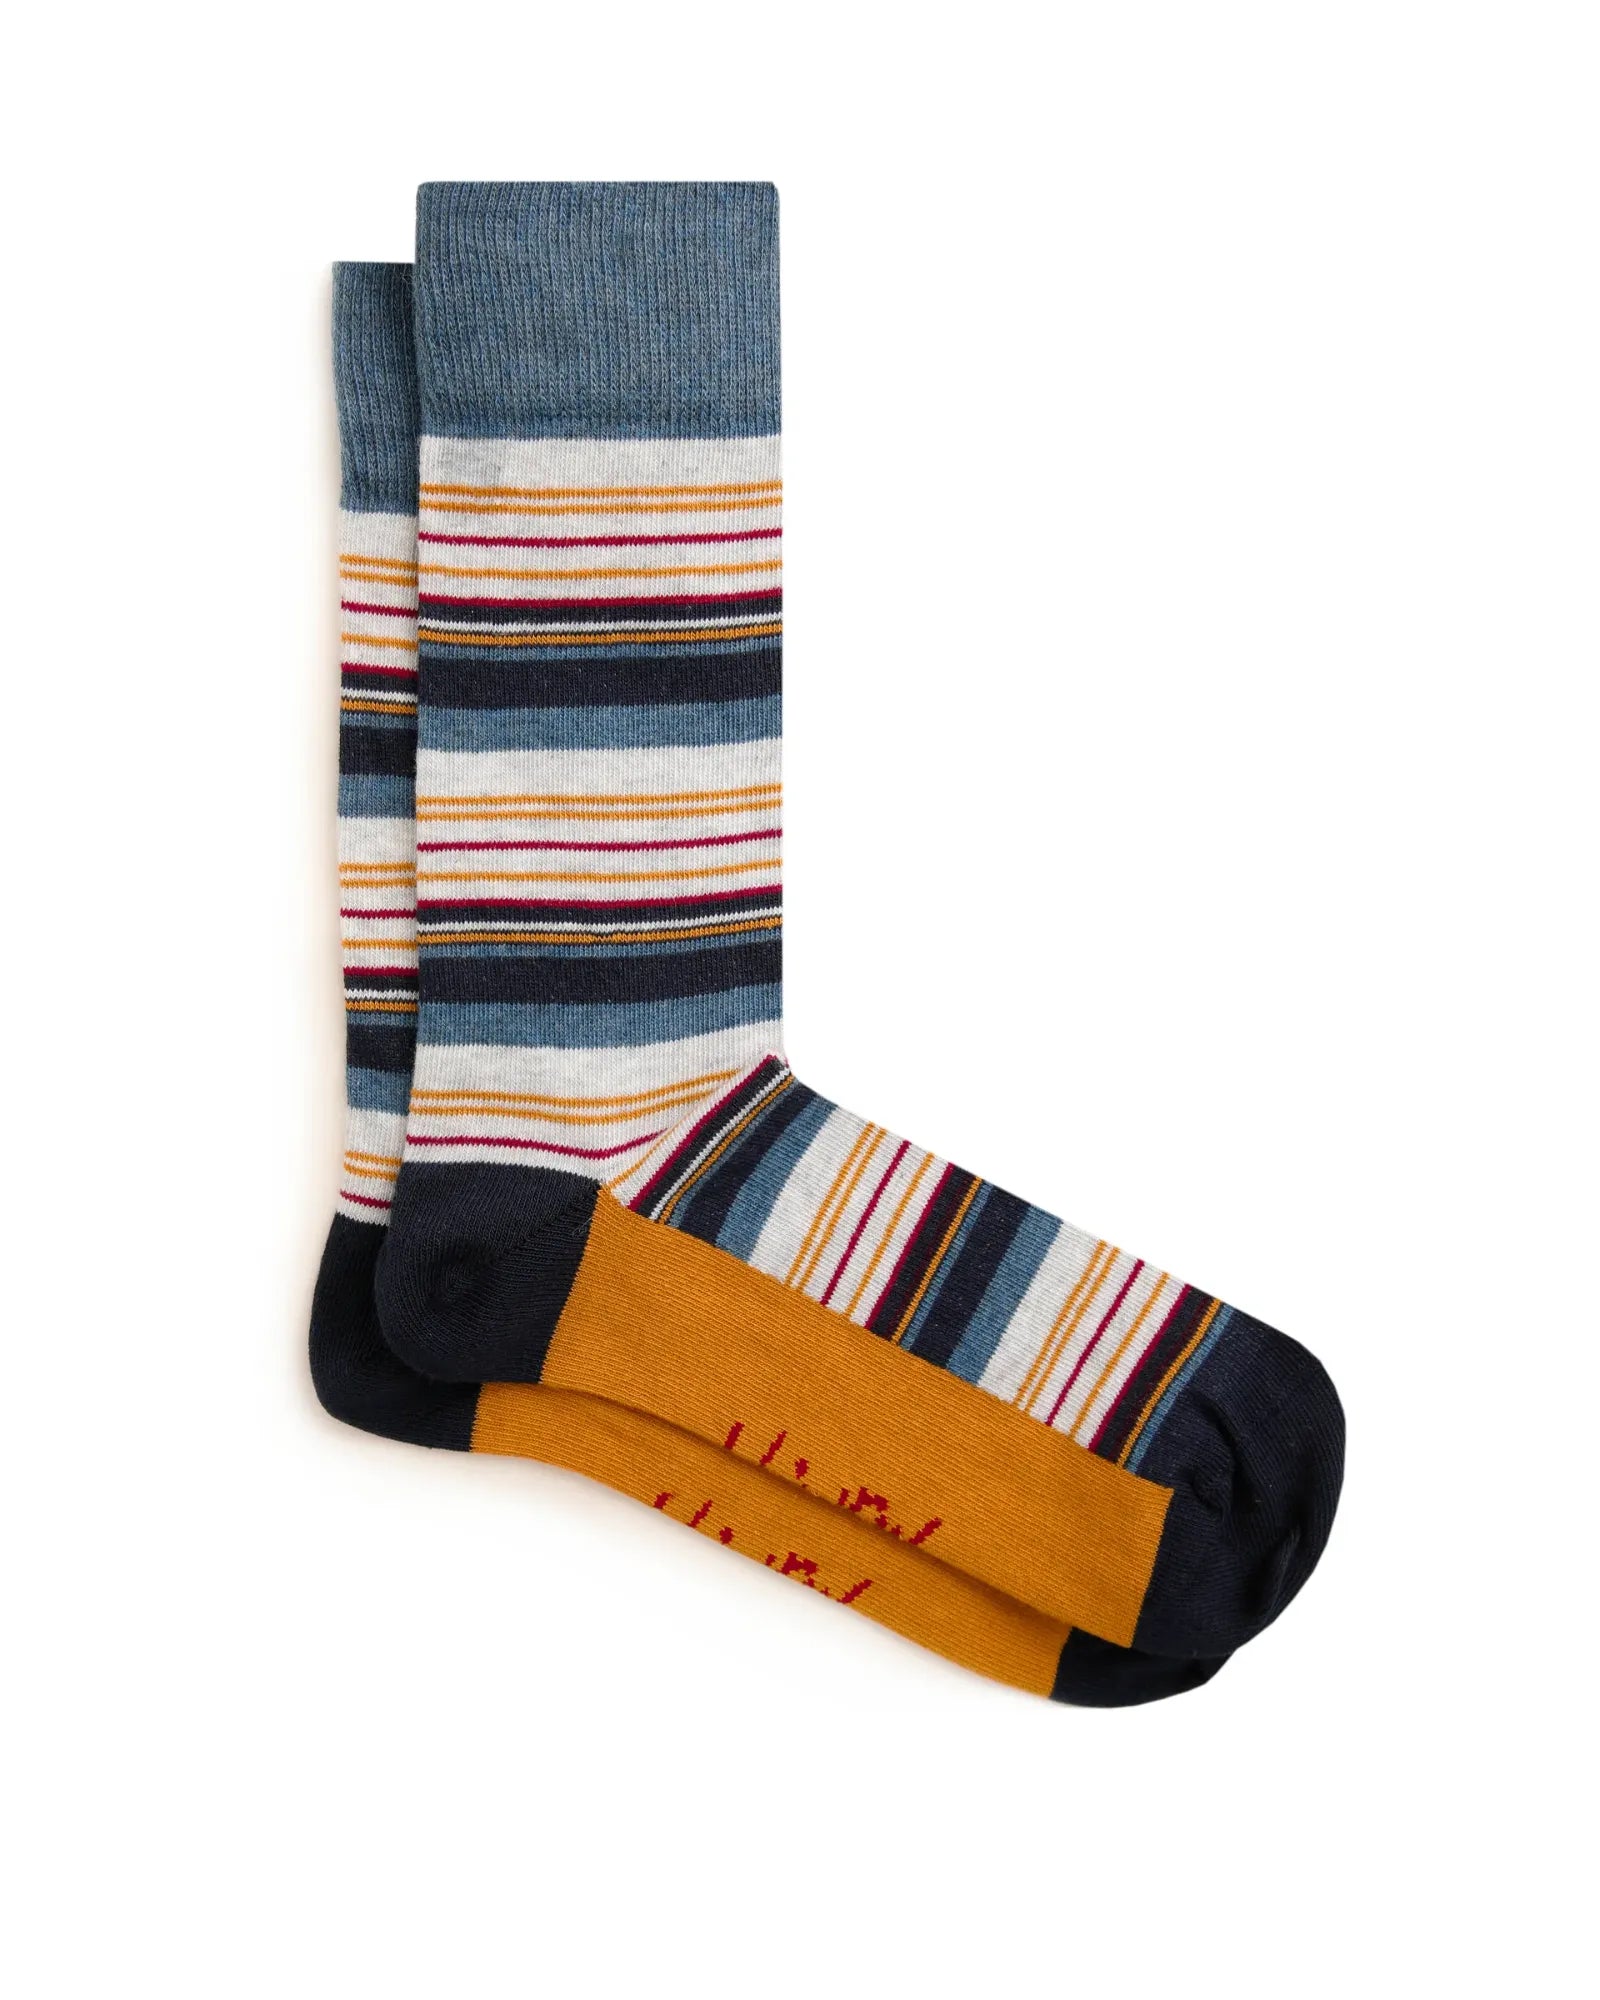 Wyatt Eco Stripe Socks Multi Pack - Foxberry